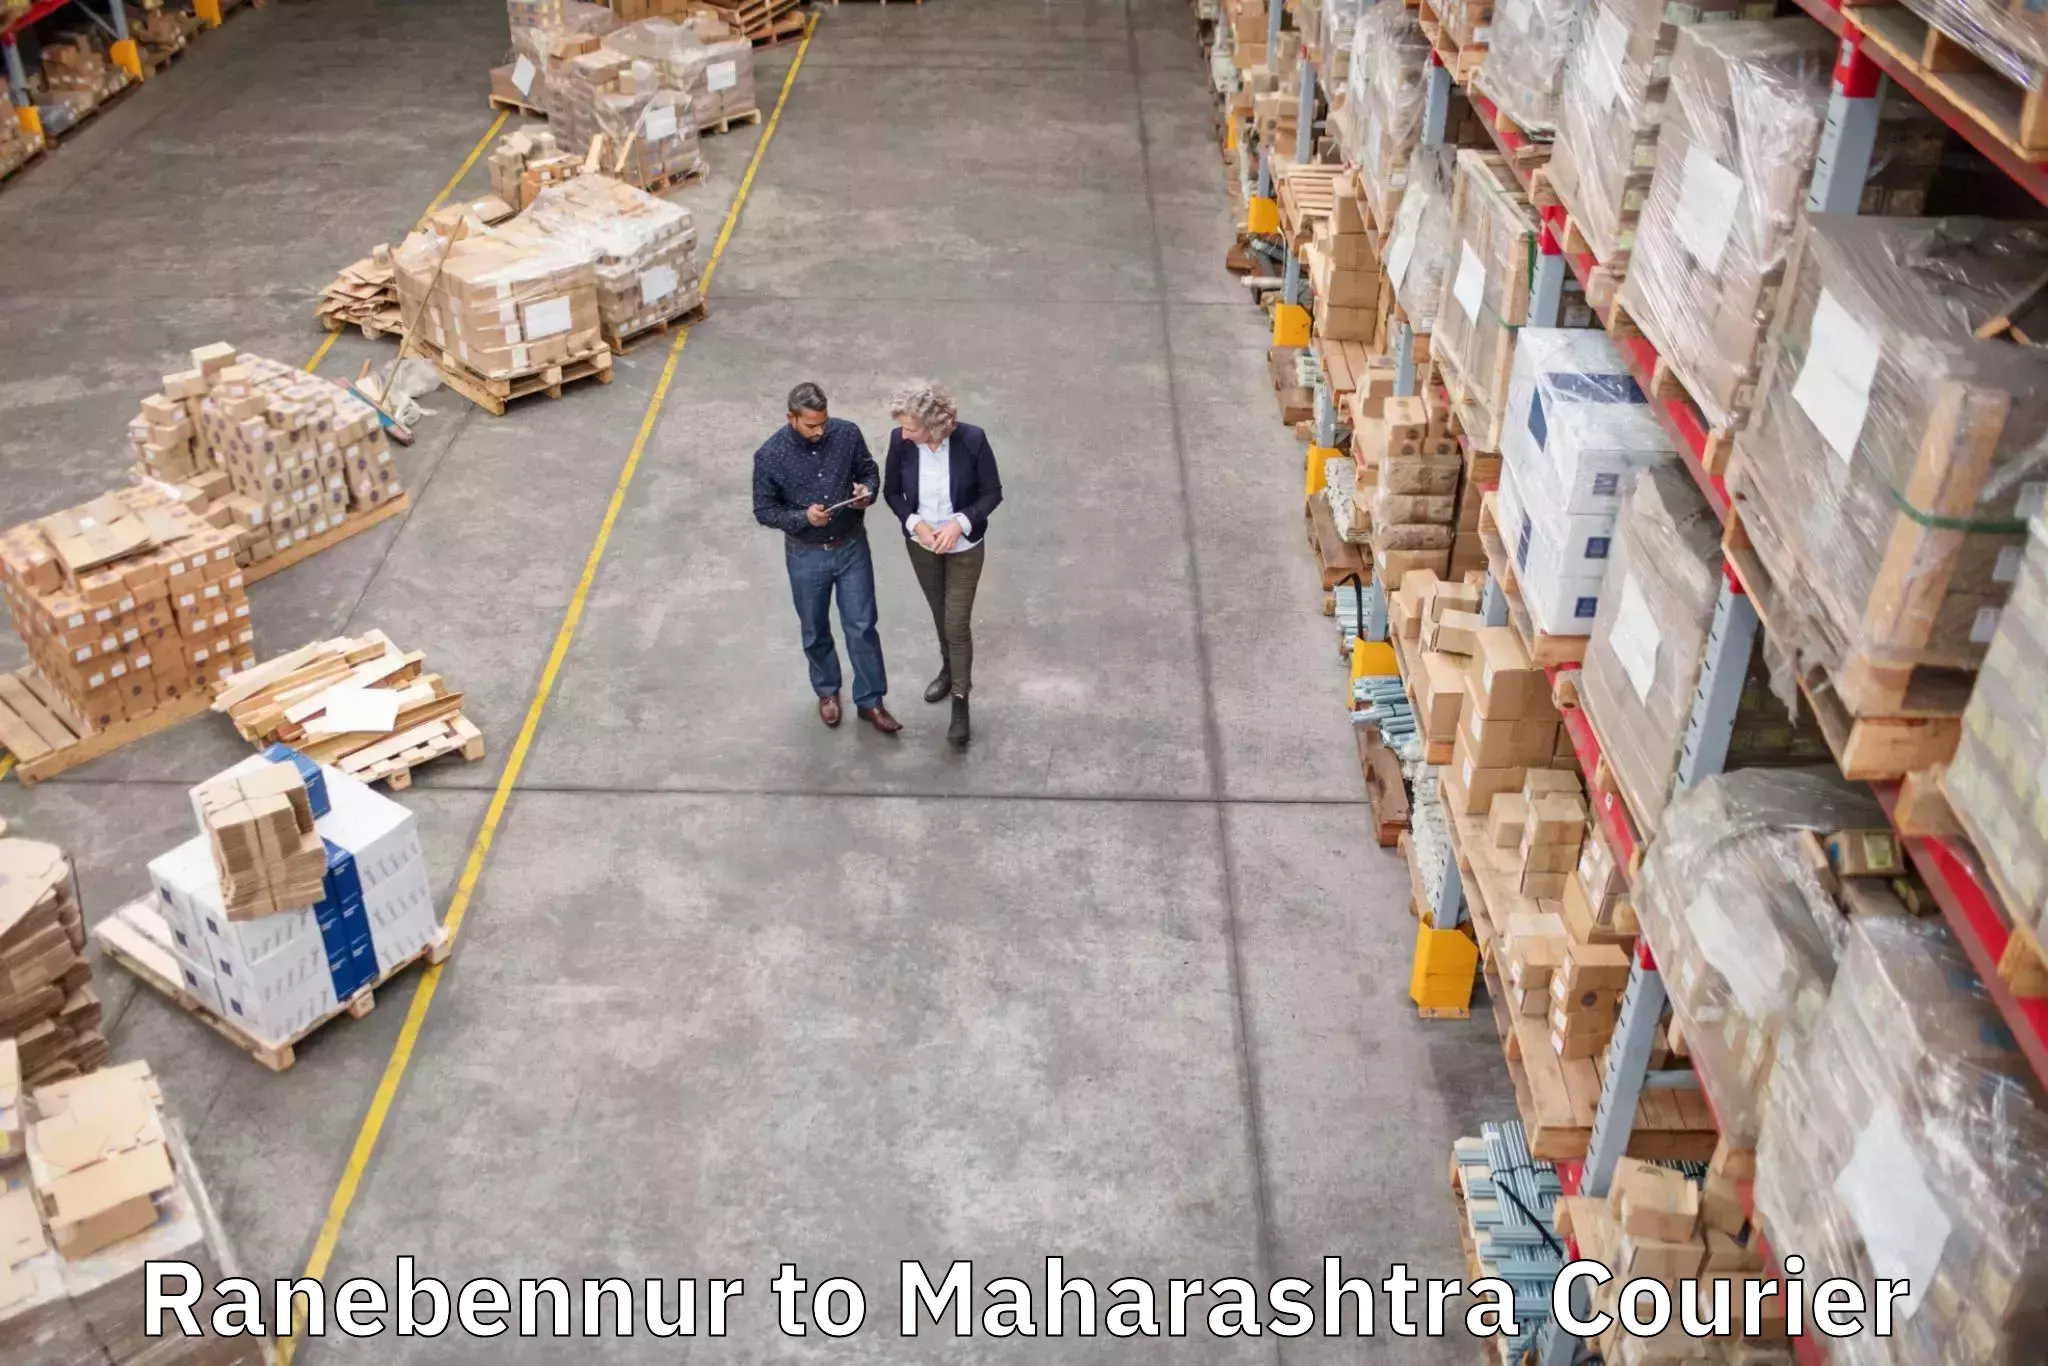 Baggage shipping quotes in Ranebennur to Maharashtra